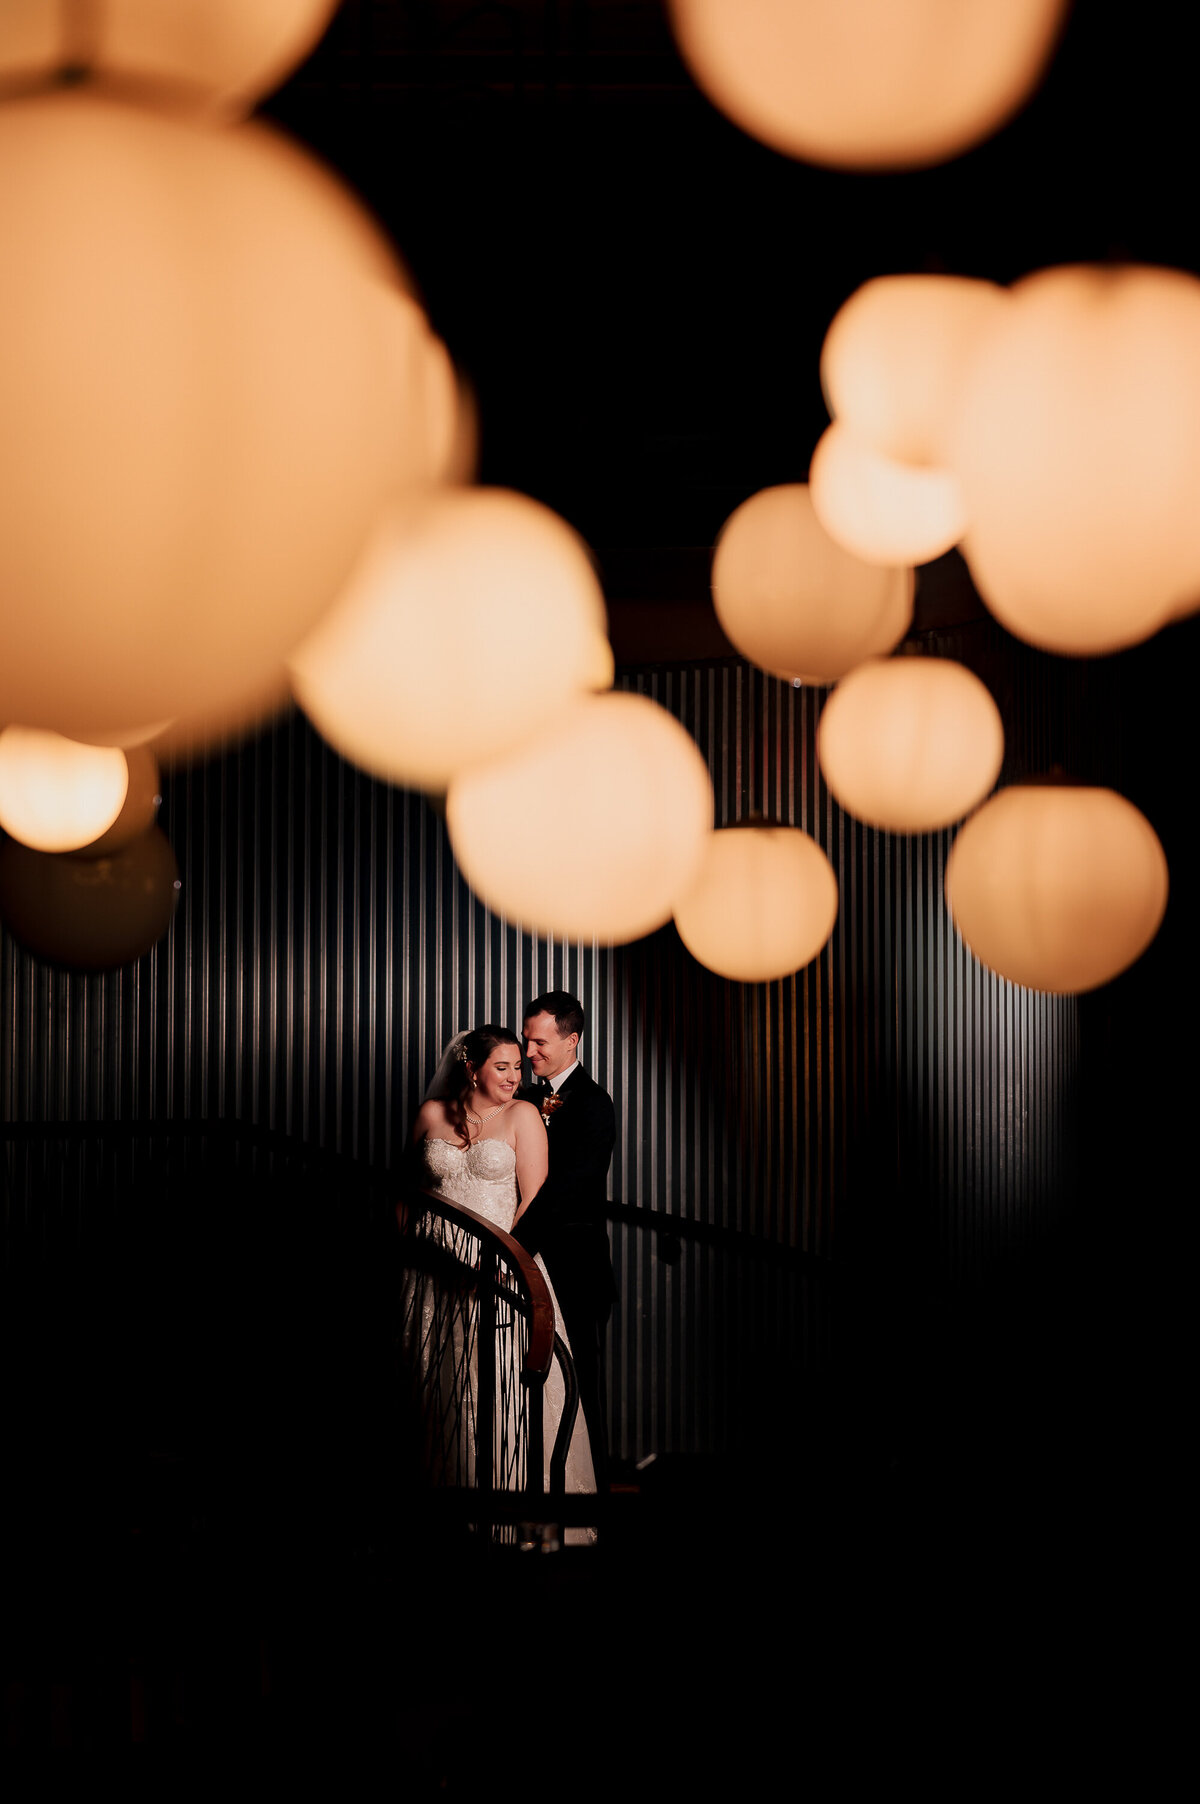 Ishan Fotografi is your NJ destination wedding photo expert